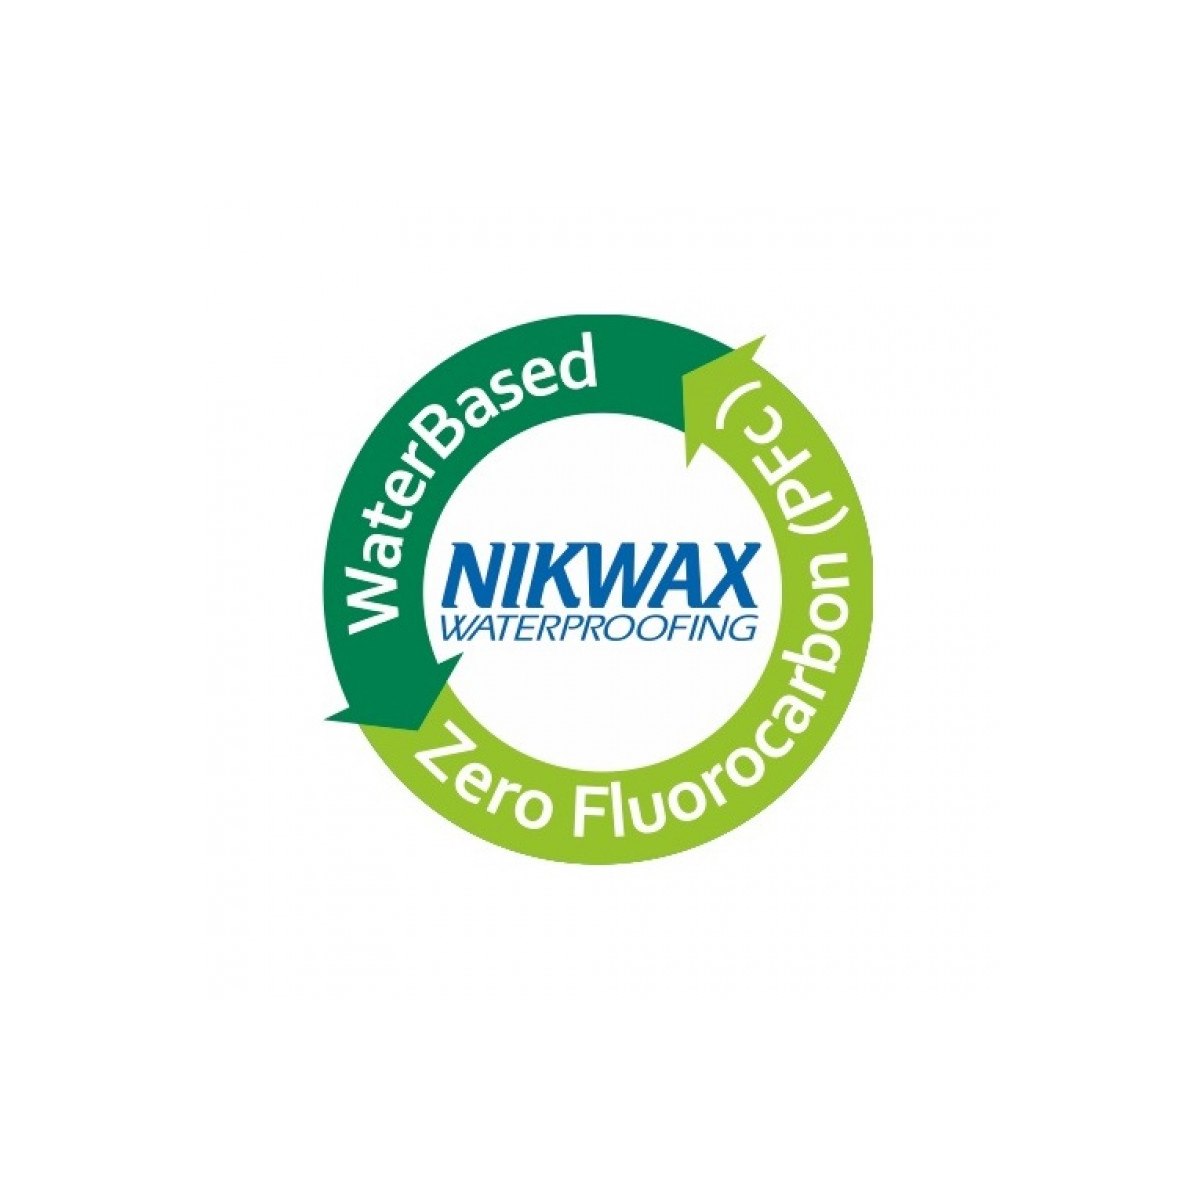 Nikwax Products